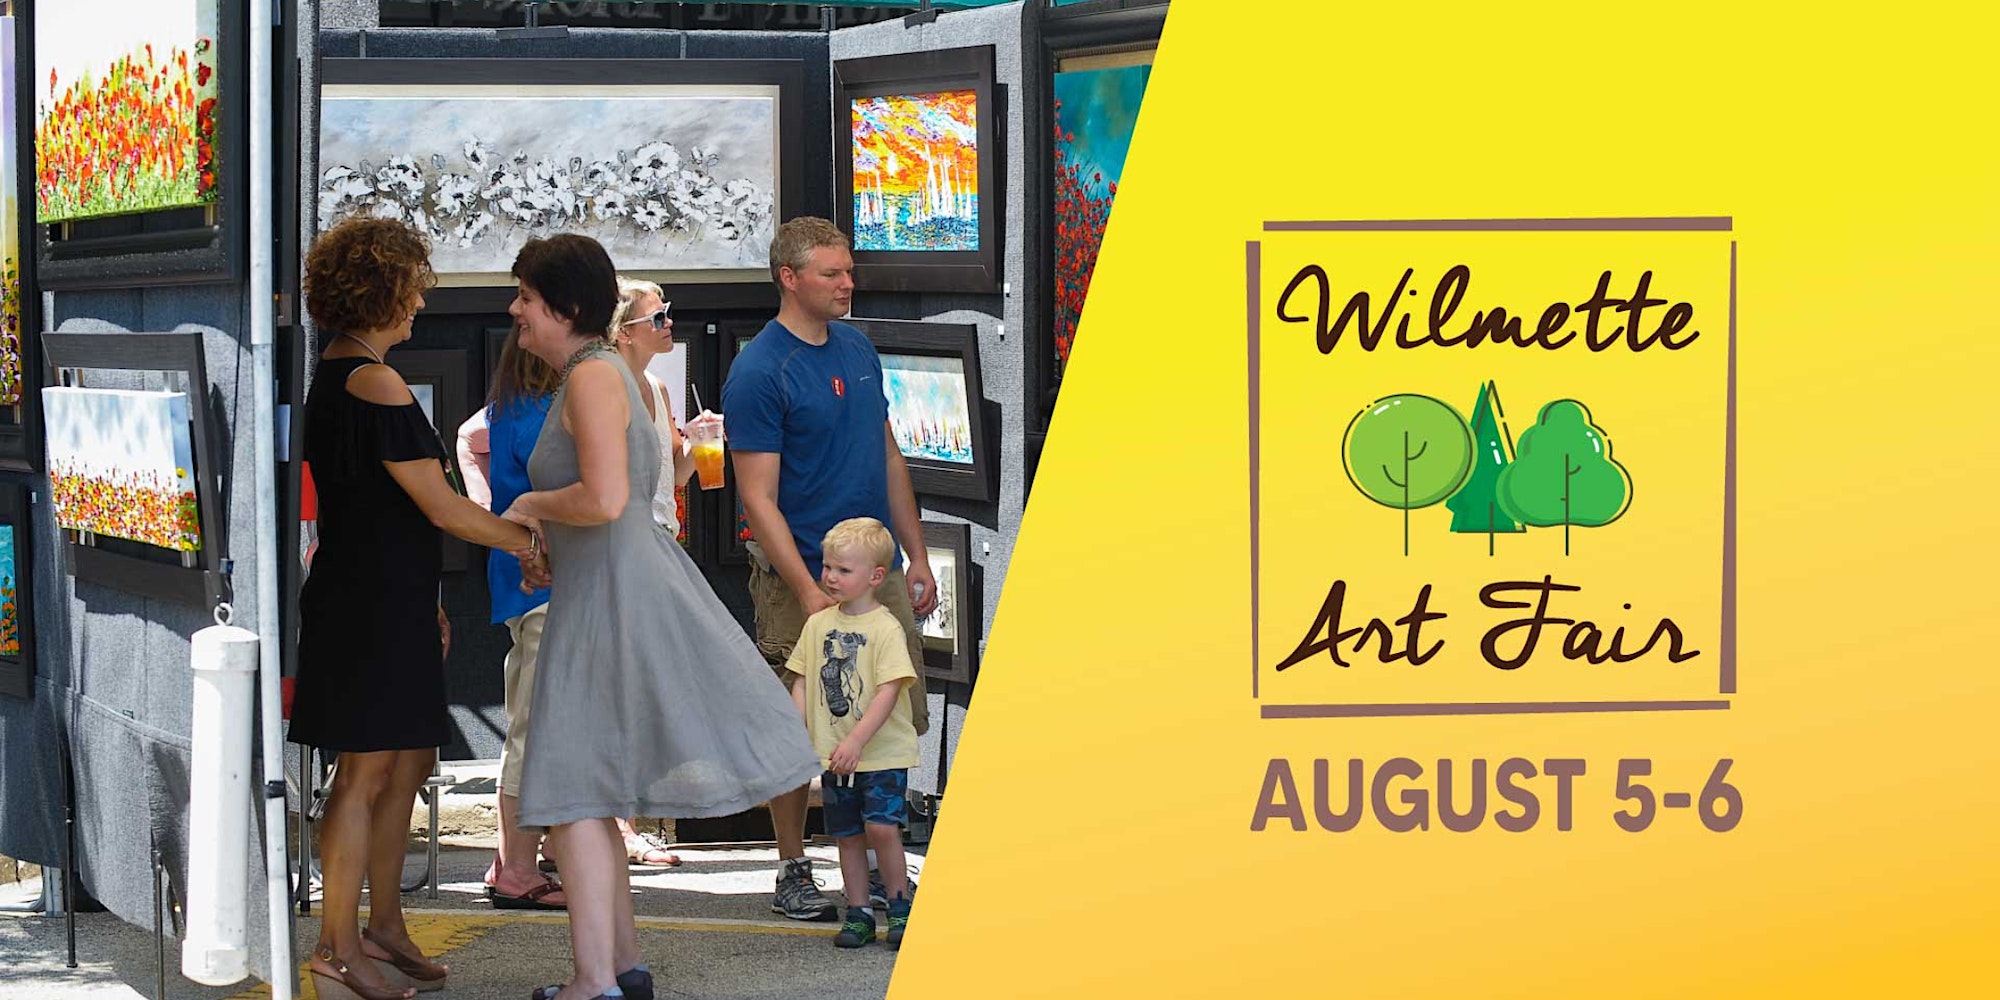 SIGN UP TO WIN 100 IN ART BUCKS! Wilmette Art Fair The Art Fair Gallery